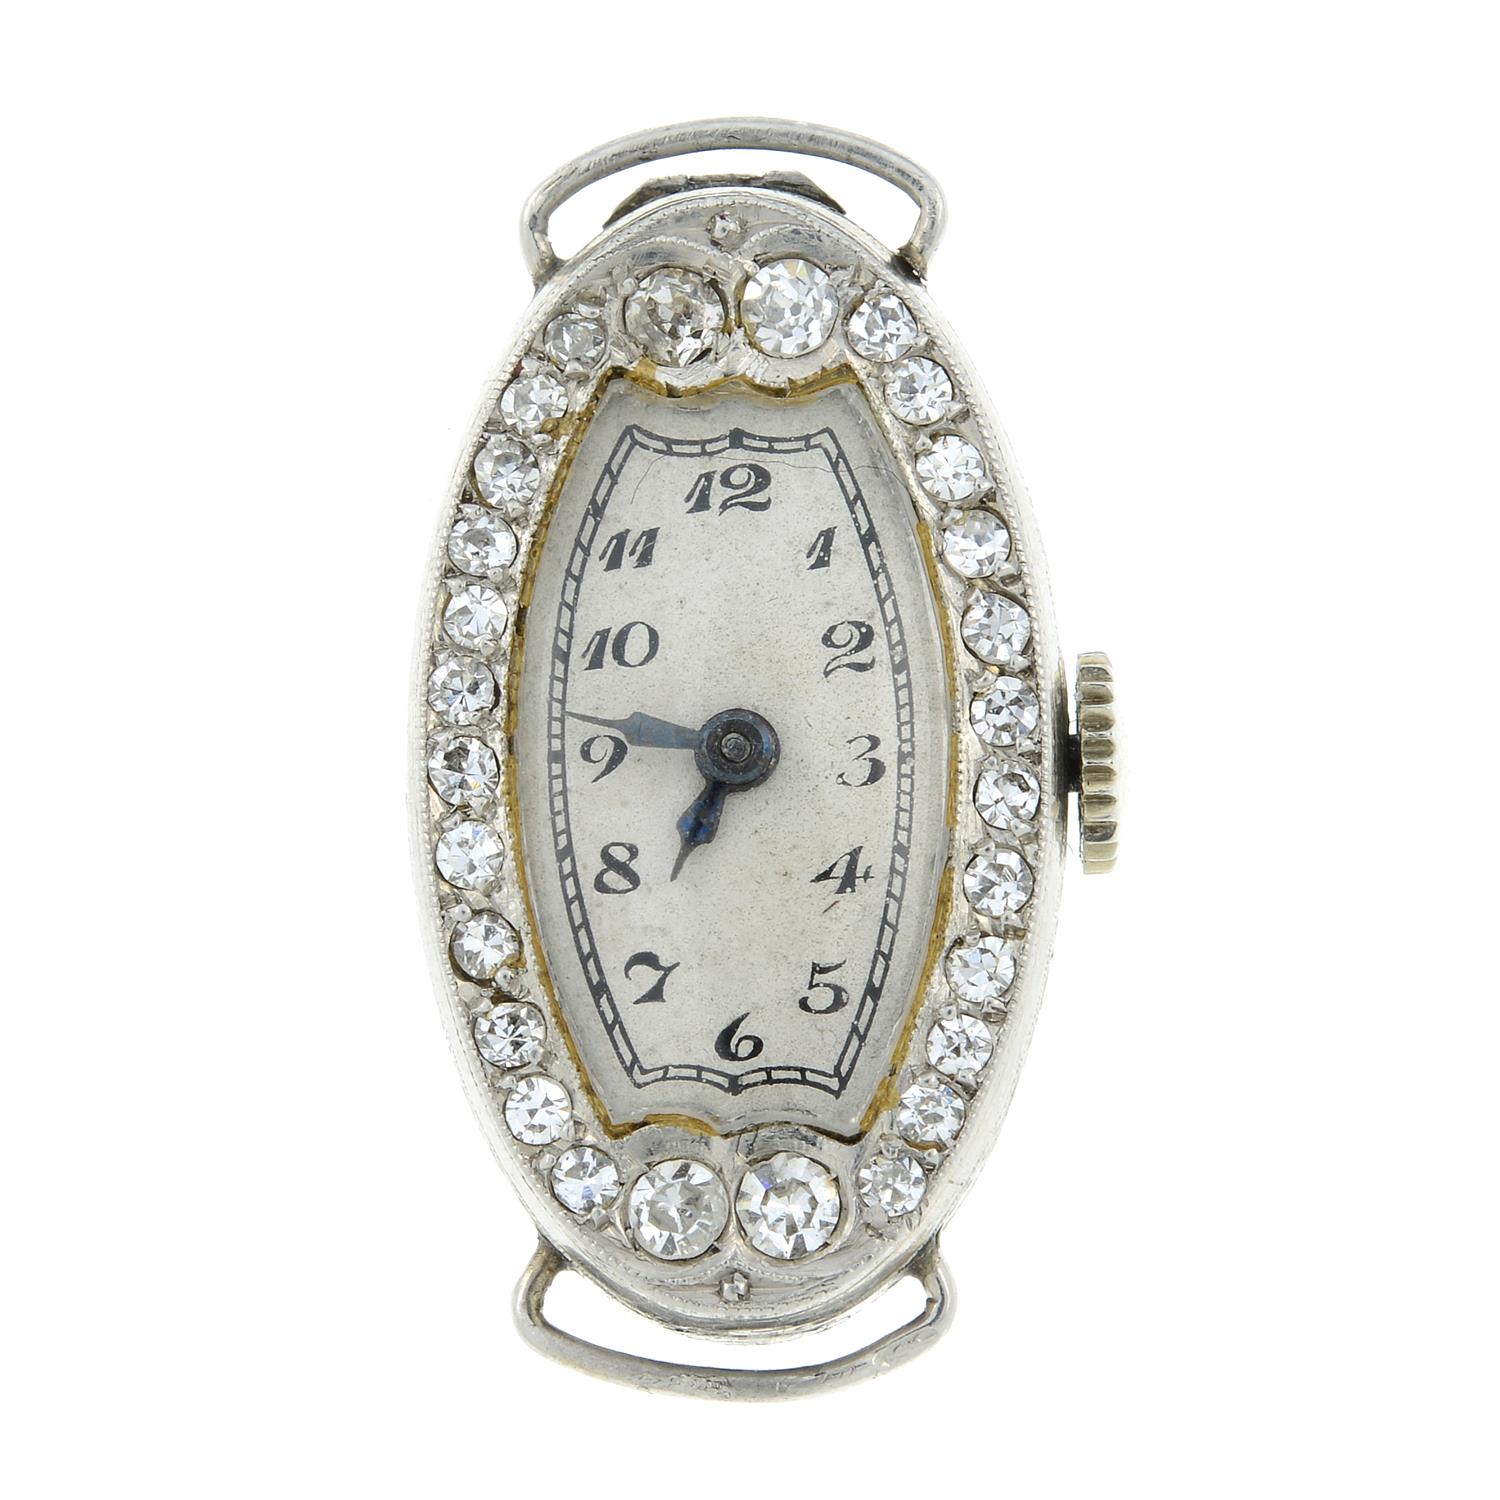 A lady's early 20th century platinum single-cut diamond cocktail watch head.